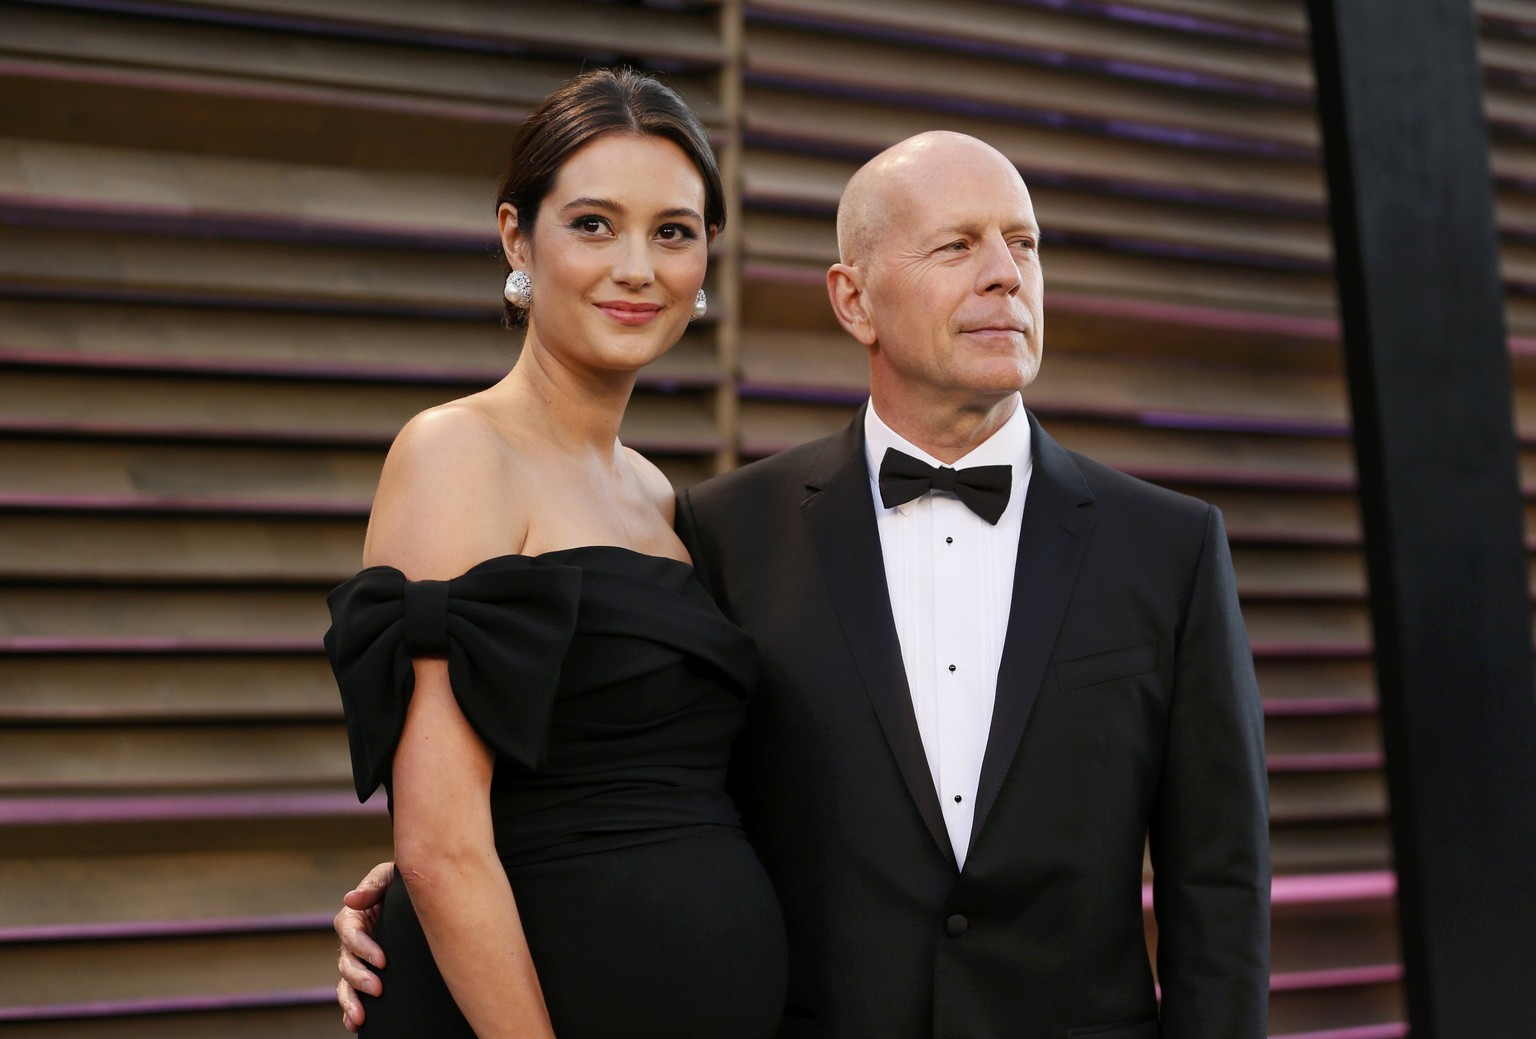 Last but not least hier Bruce Willis mit Ehefrau&nbsp;Emma Heming bei den Oscars 2014.